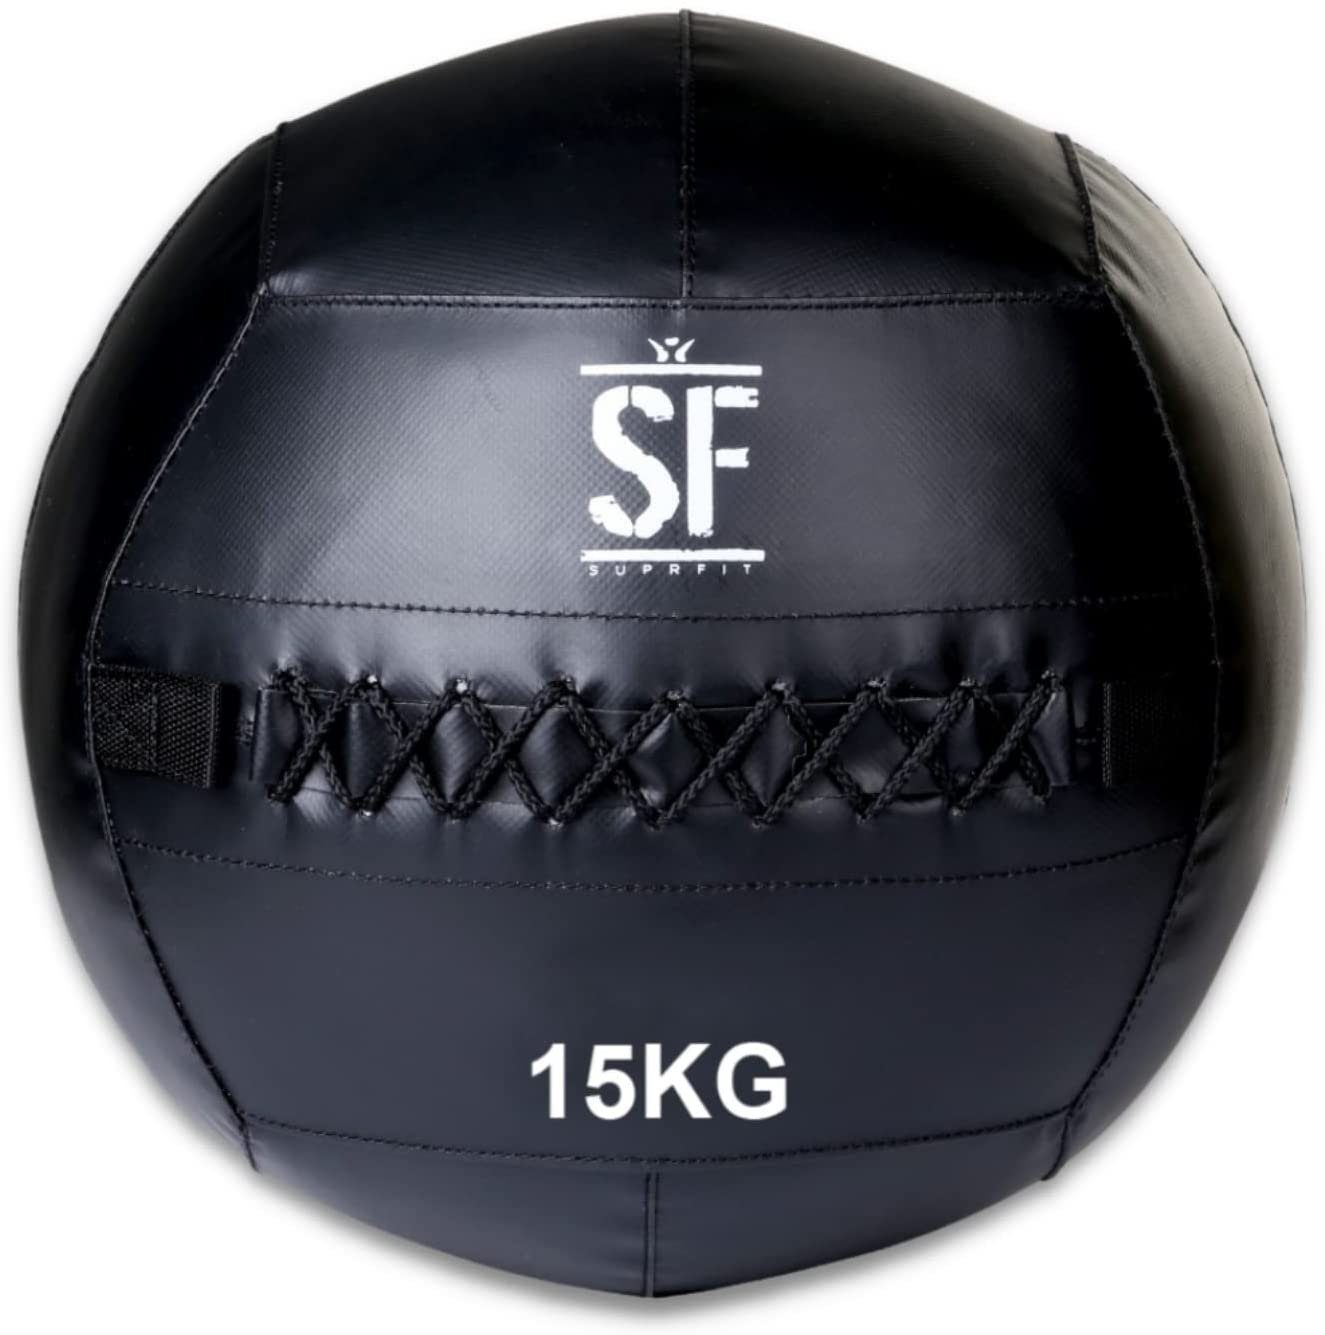 SF SUPRFIT Medizinball Medizinball für Cross- & Functional Training